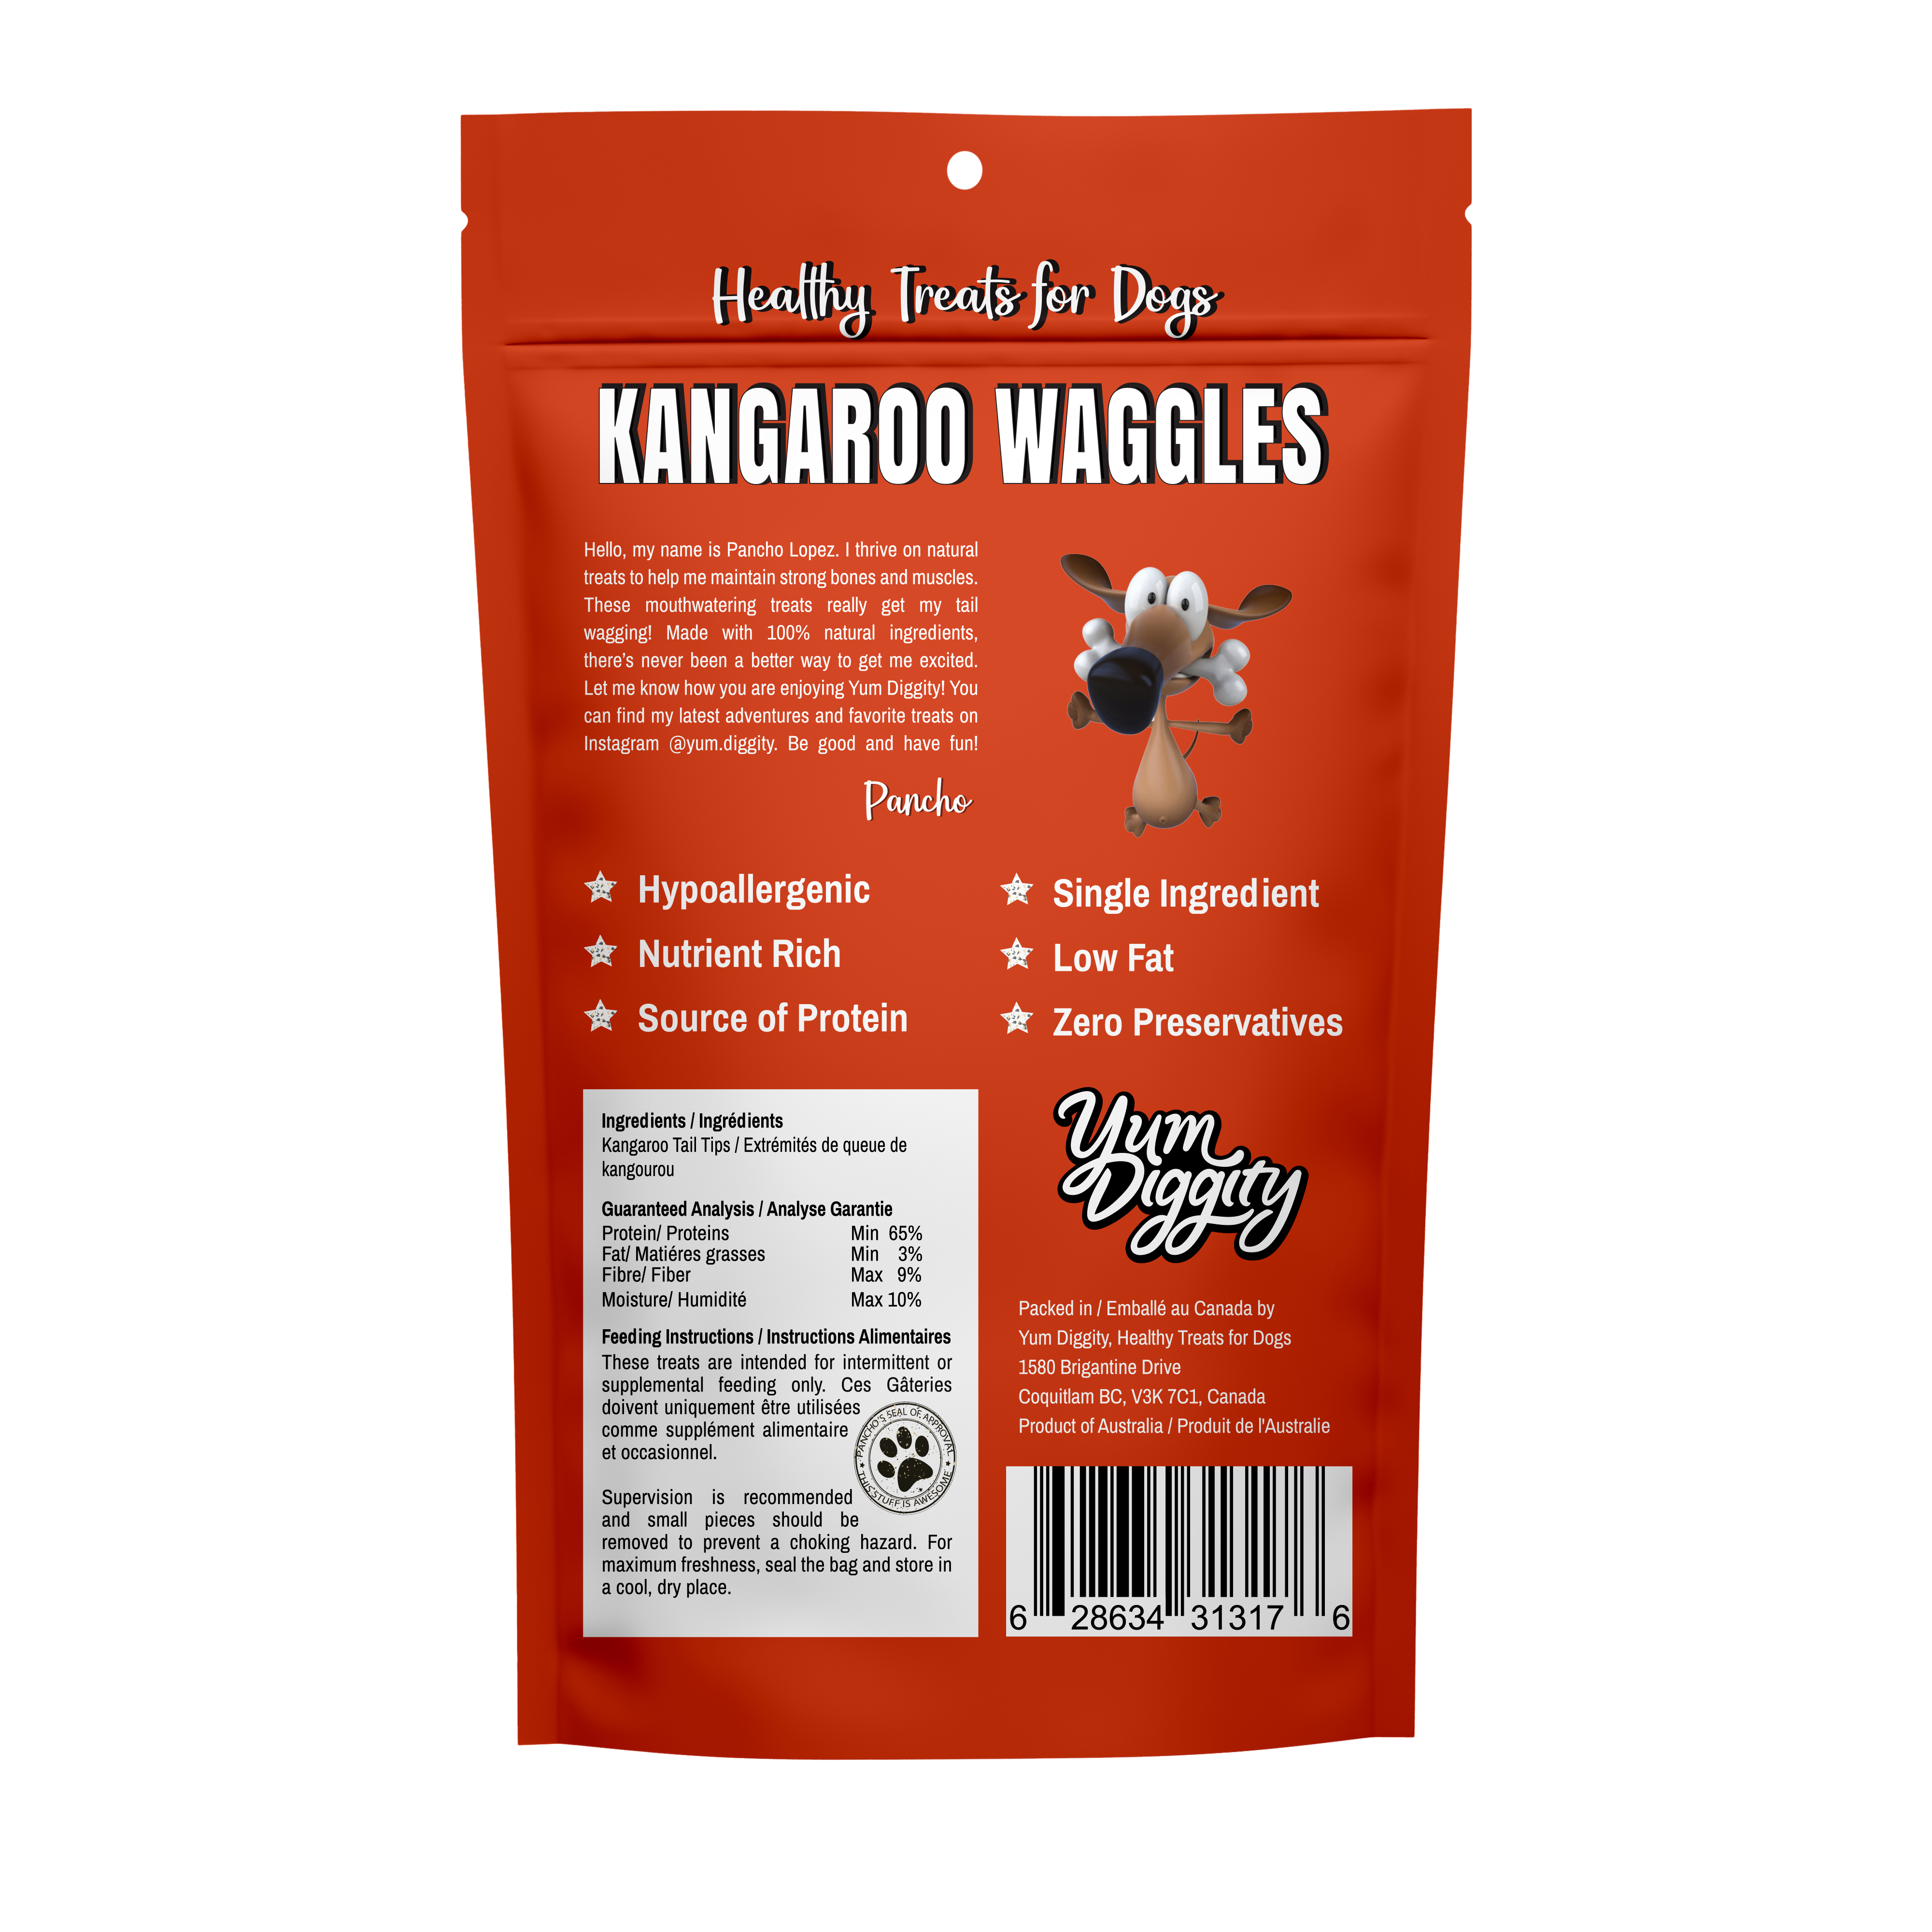 Yum Diggity - Kangaroo "Waggles" Tail Tips